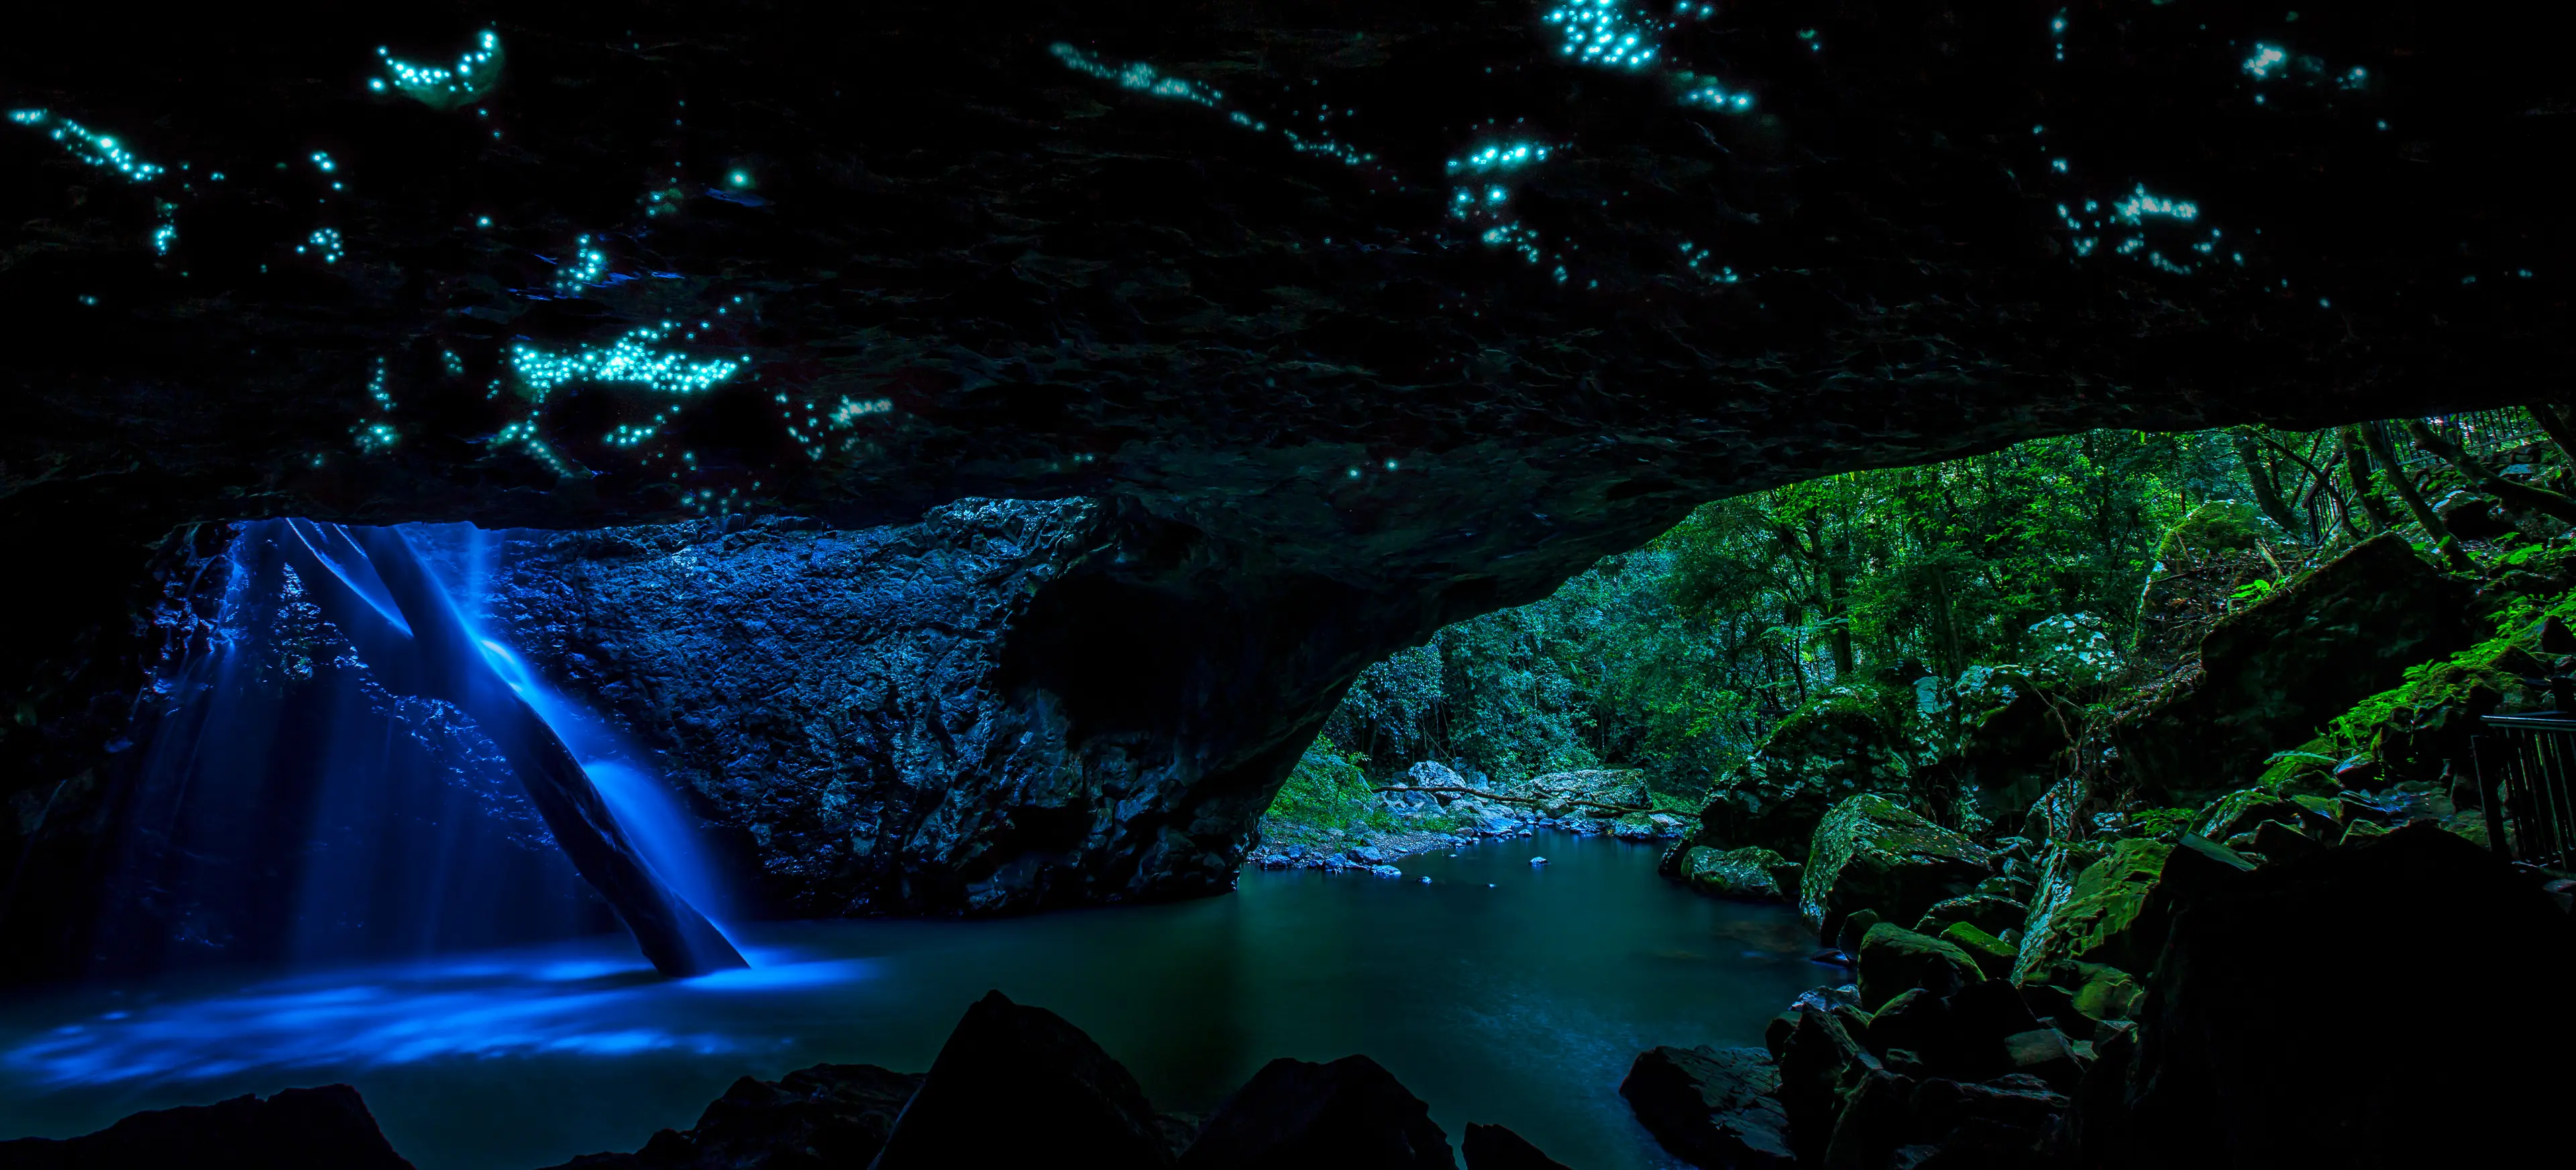 Glow Worm Caves